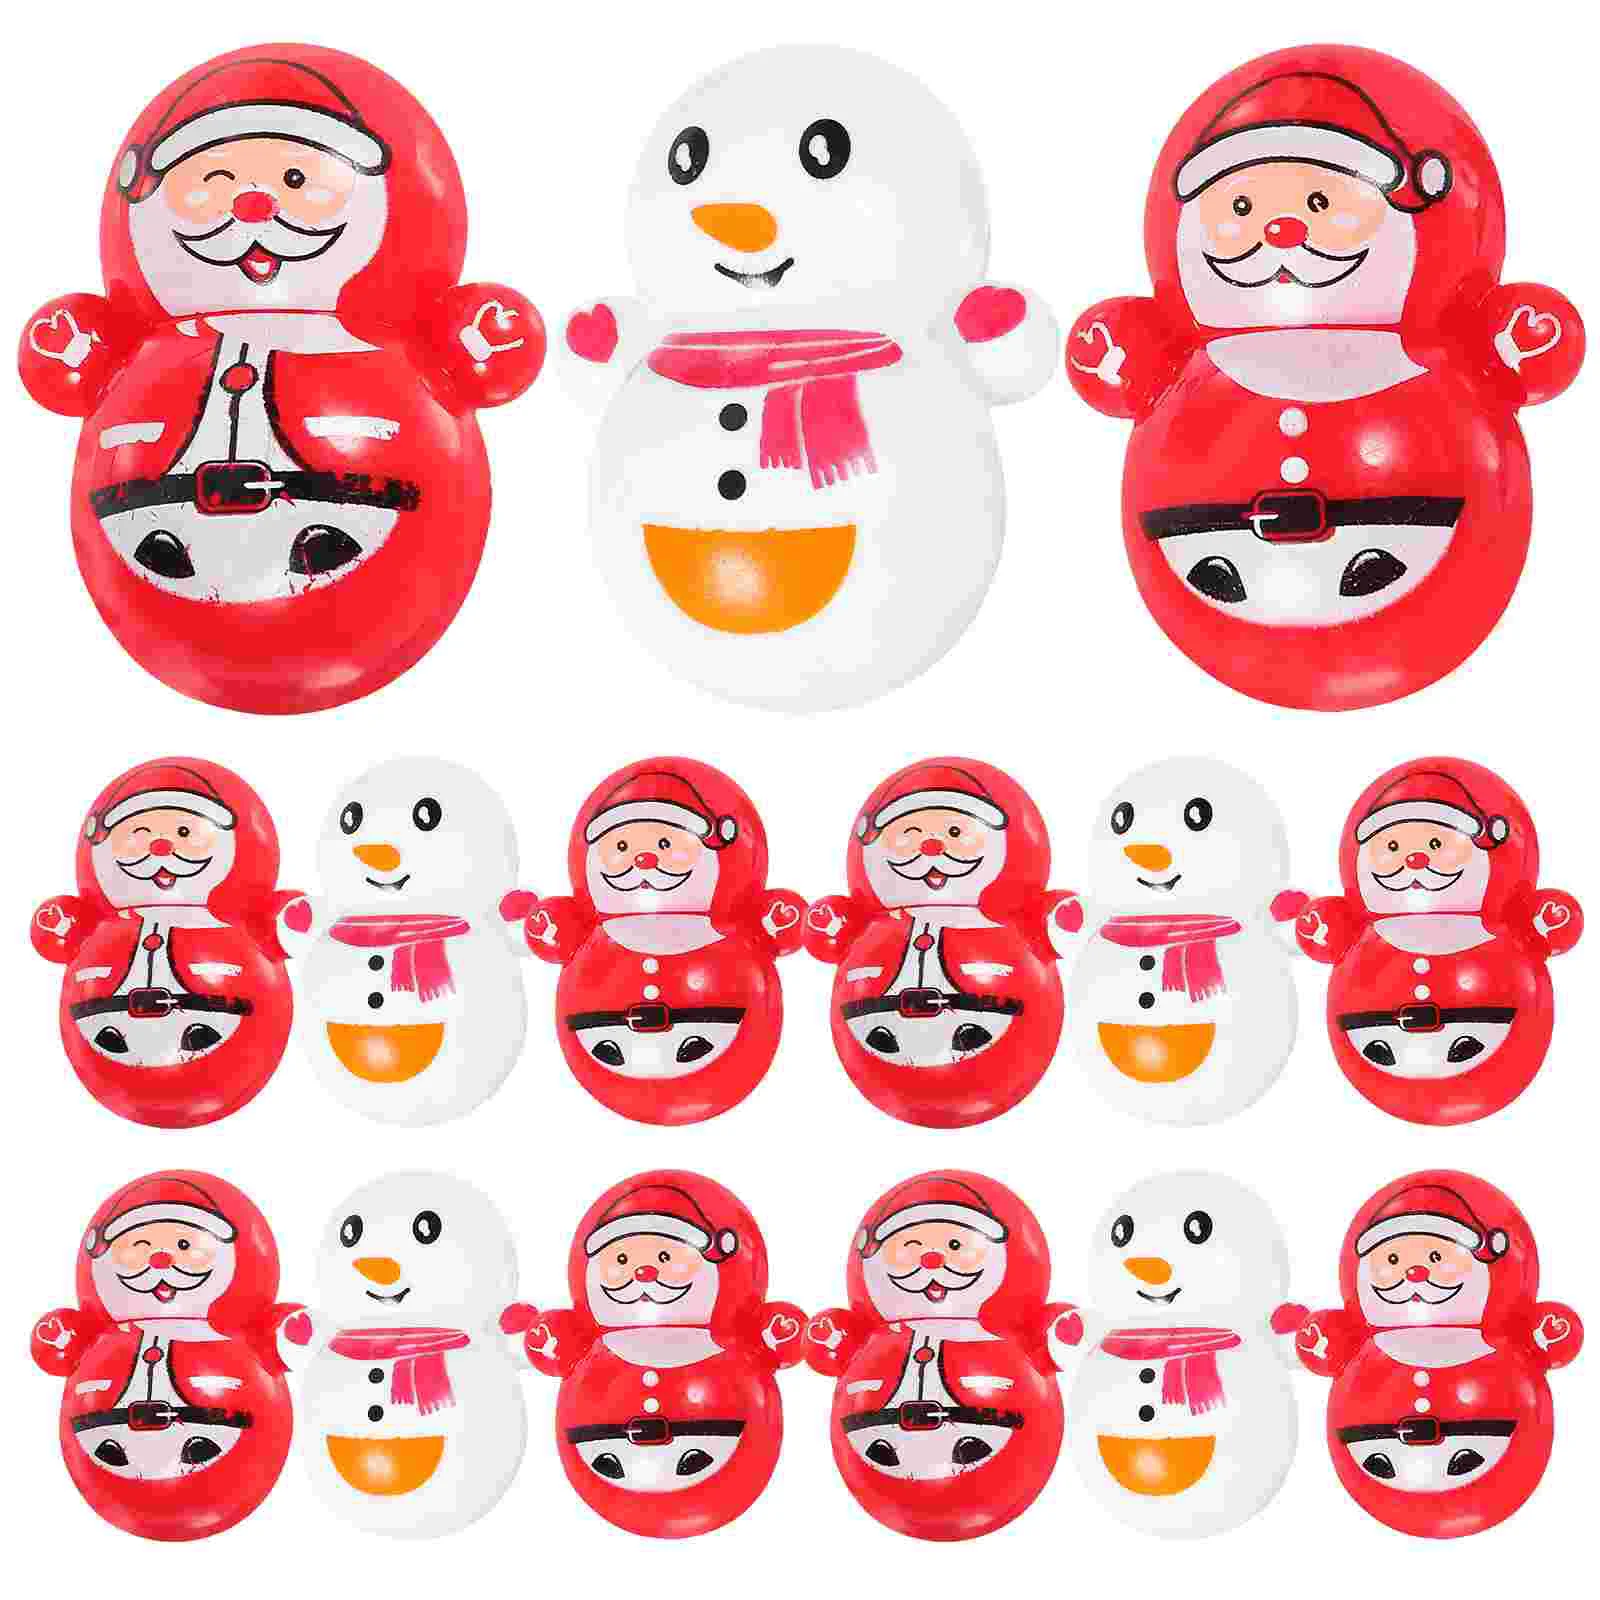 

60 Pcs Home Decor Decors Christmas Desktop Themed Tumbler Toys Plastic Santa Claus Ornaments Playthings Child Lovely